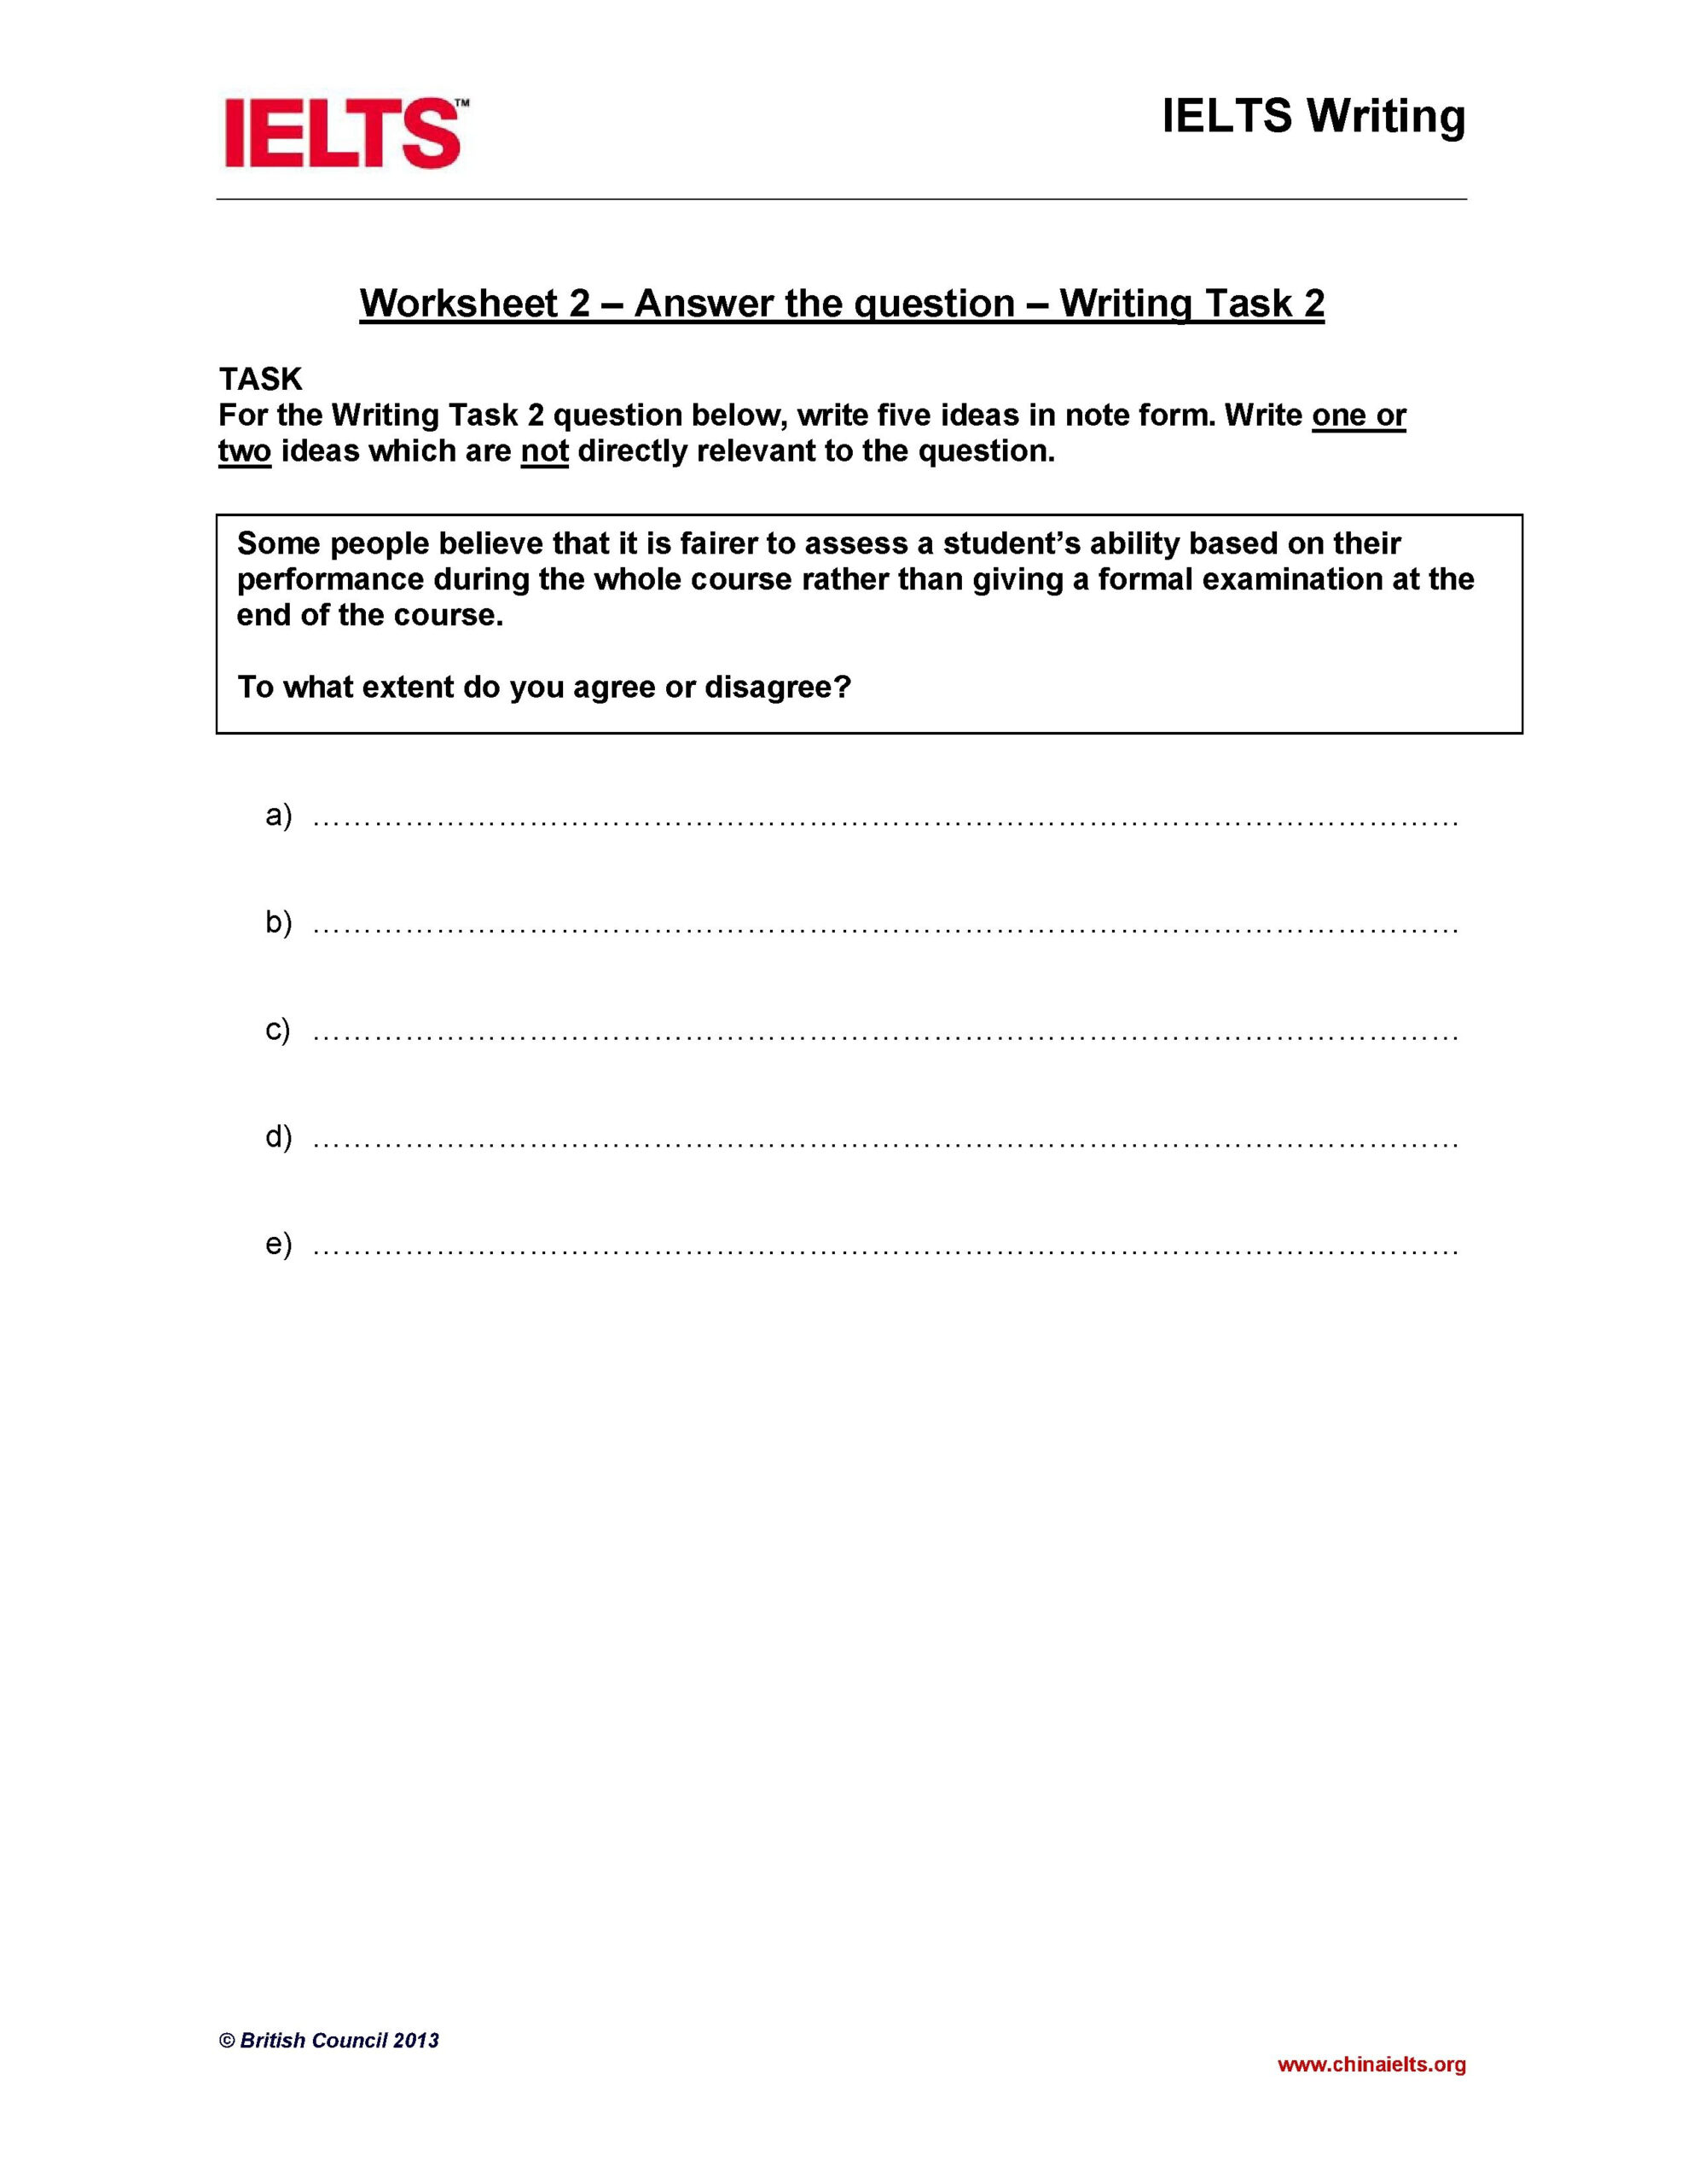 Worksheet 2 | Ielts Writing, Ielts, Writing Tasks pertaining to Alphabet Worksheets British Council